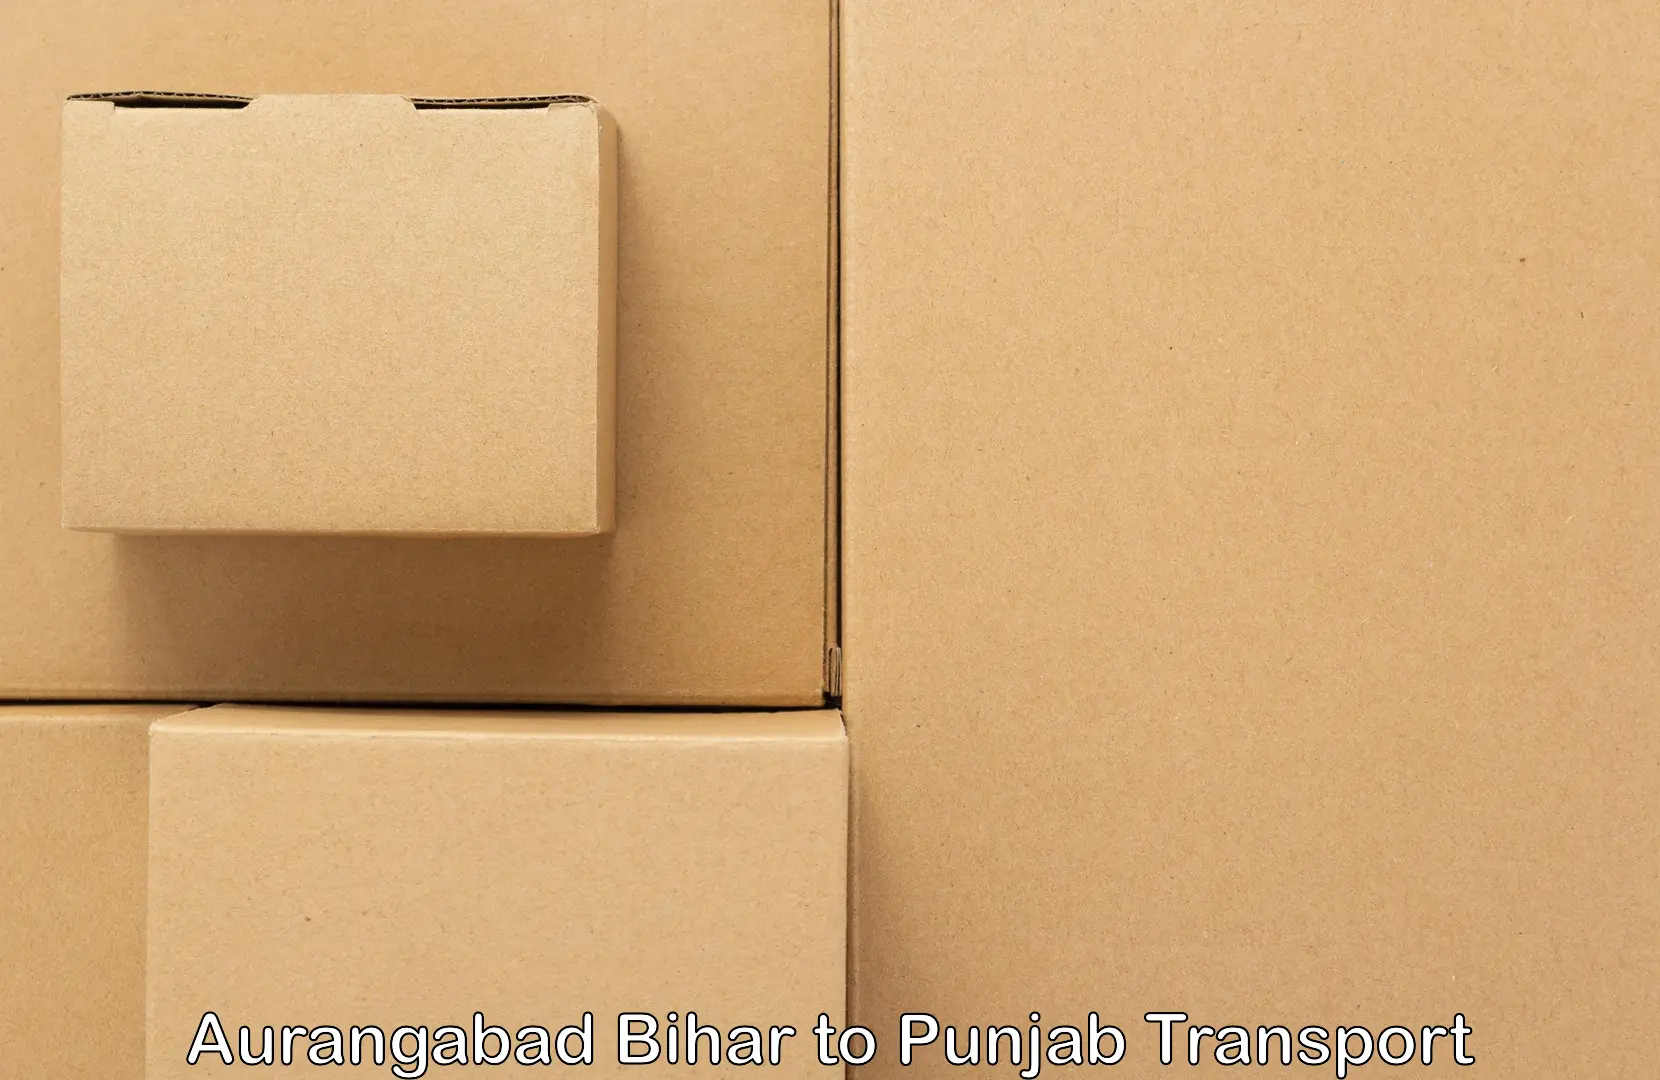 Container transport service Aurangabad Bihar to Amritsar